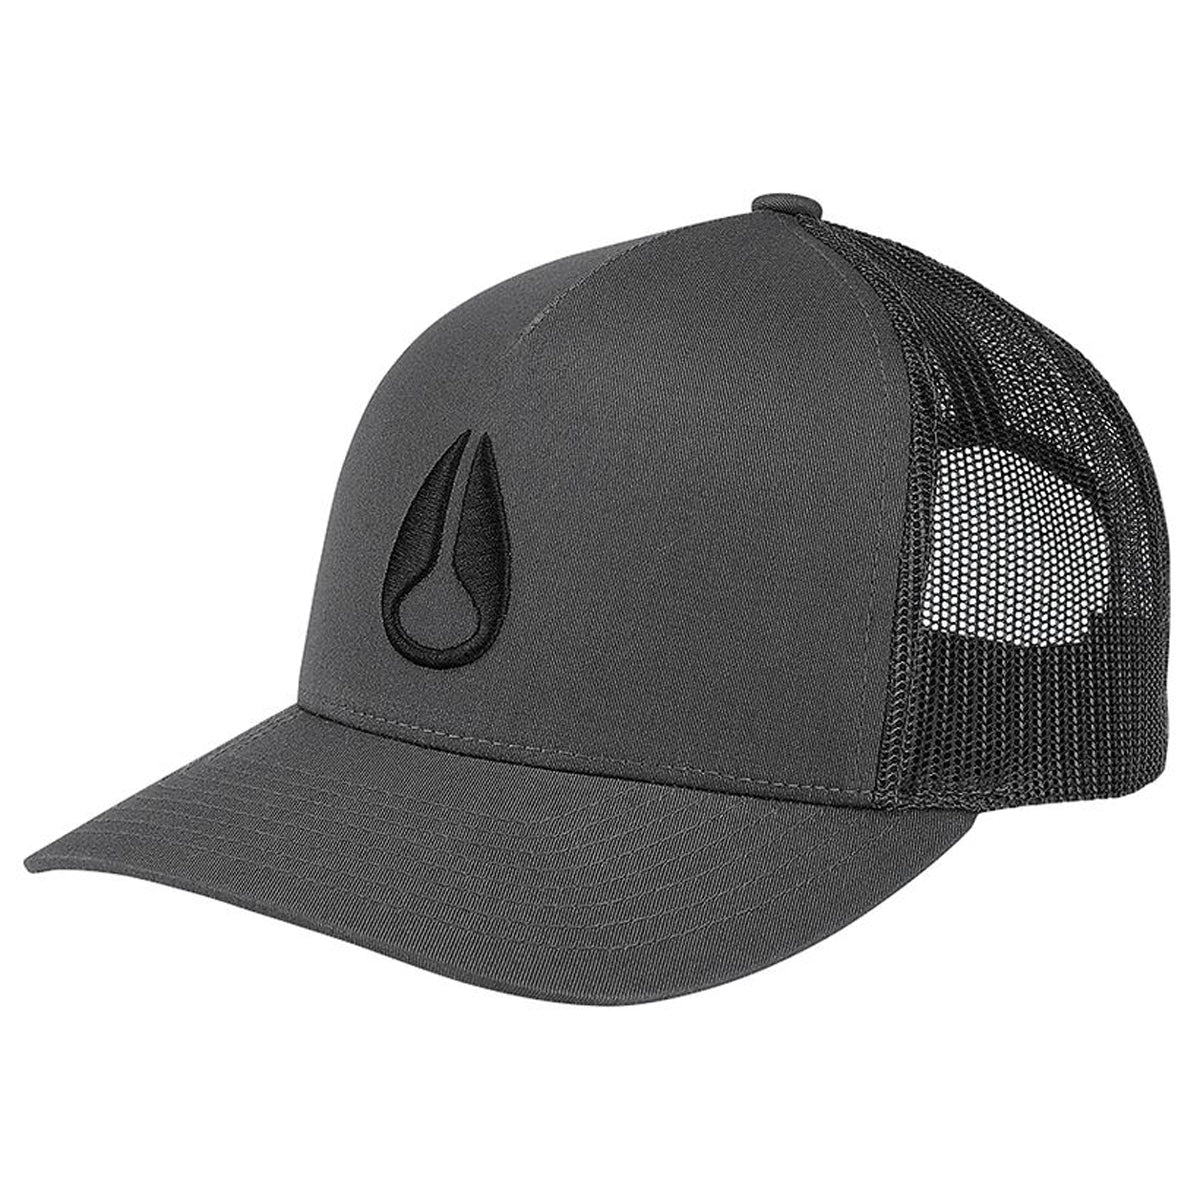 Nixon Iconed Trucker Hat - Charcoal/Black image 1